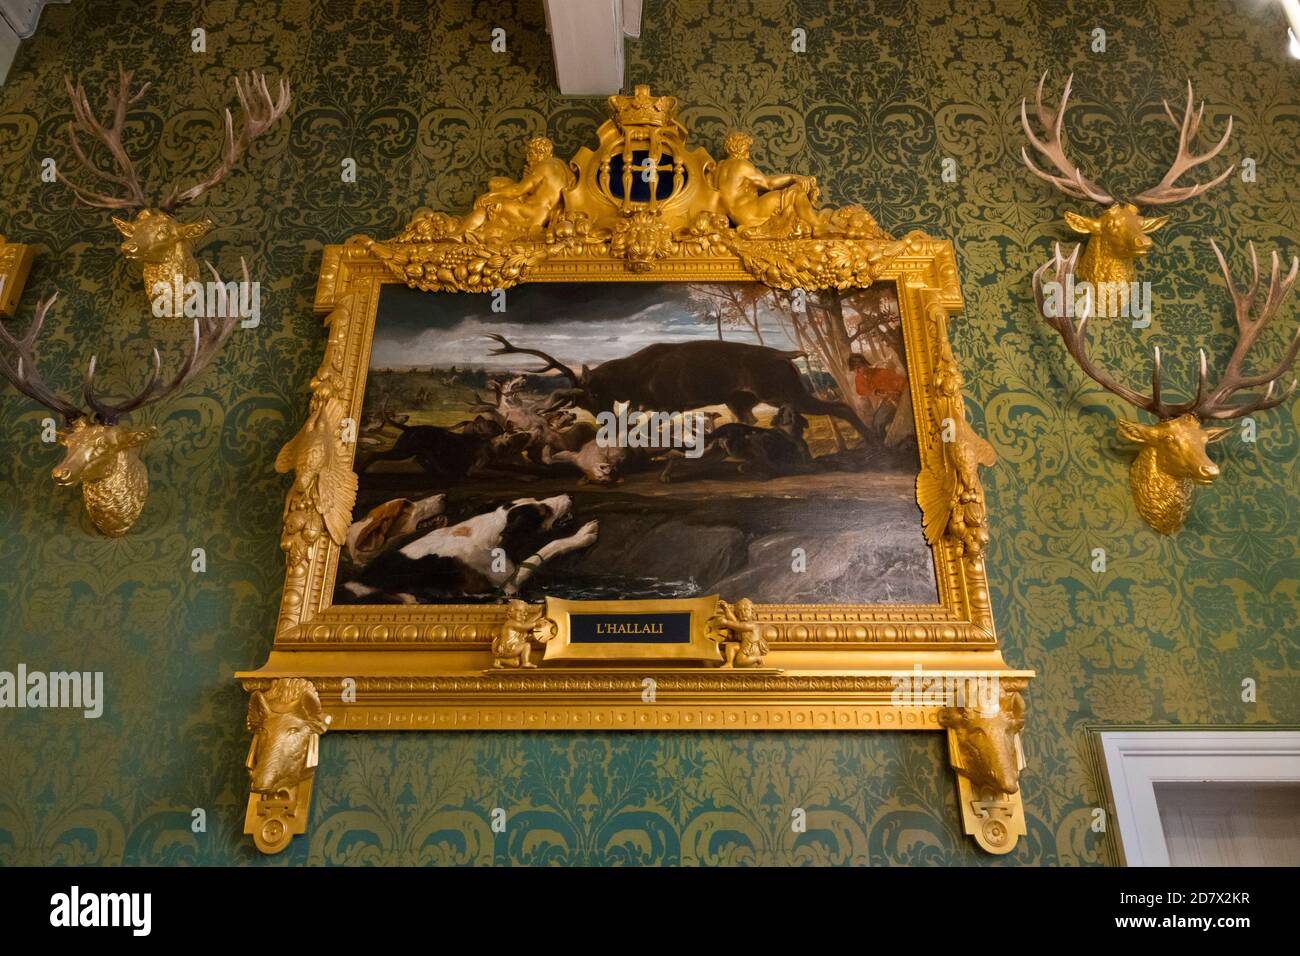 France, Loir-et-Cher (41), Chambord (UNESCO World Heritage), royal castle of the Renaissance, hunting room, painting of hallali hunting scene Stock Photo